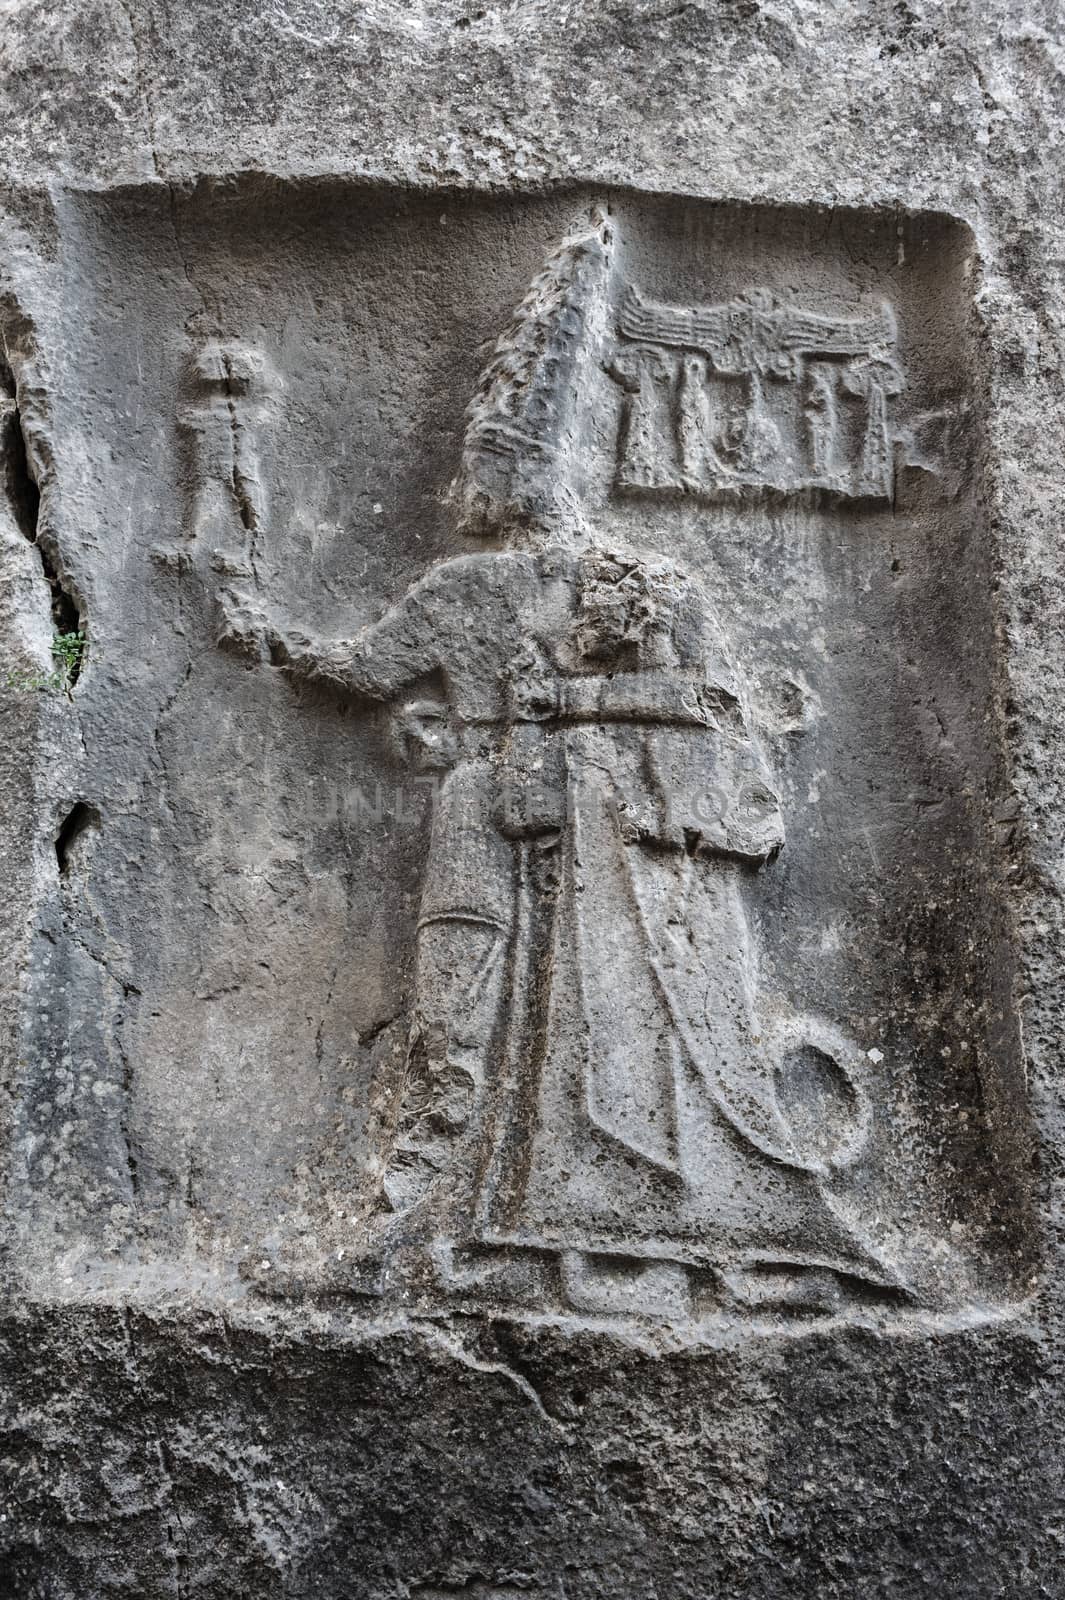 Rock carving in Yazilikaya depicting god Sharruma and King Tudhaliya dated to around 1250 - 1220 BC.